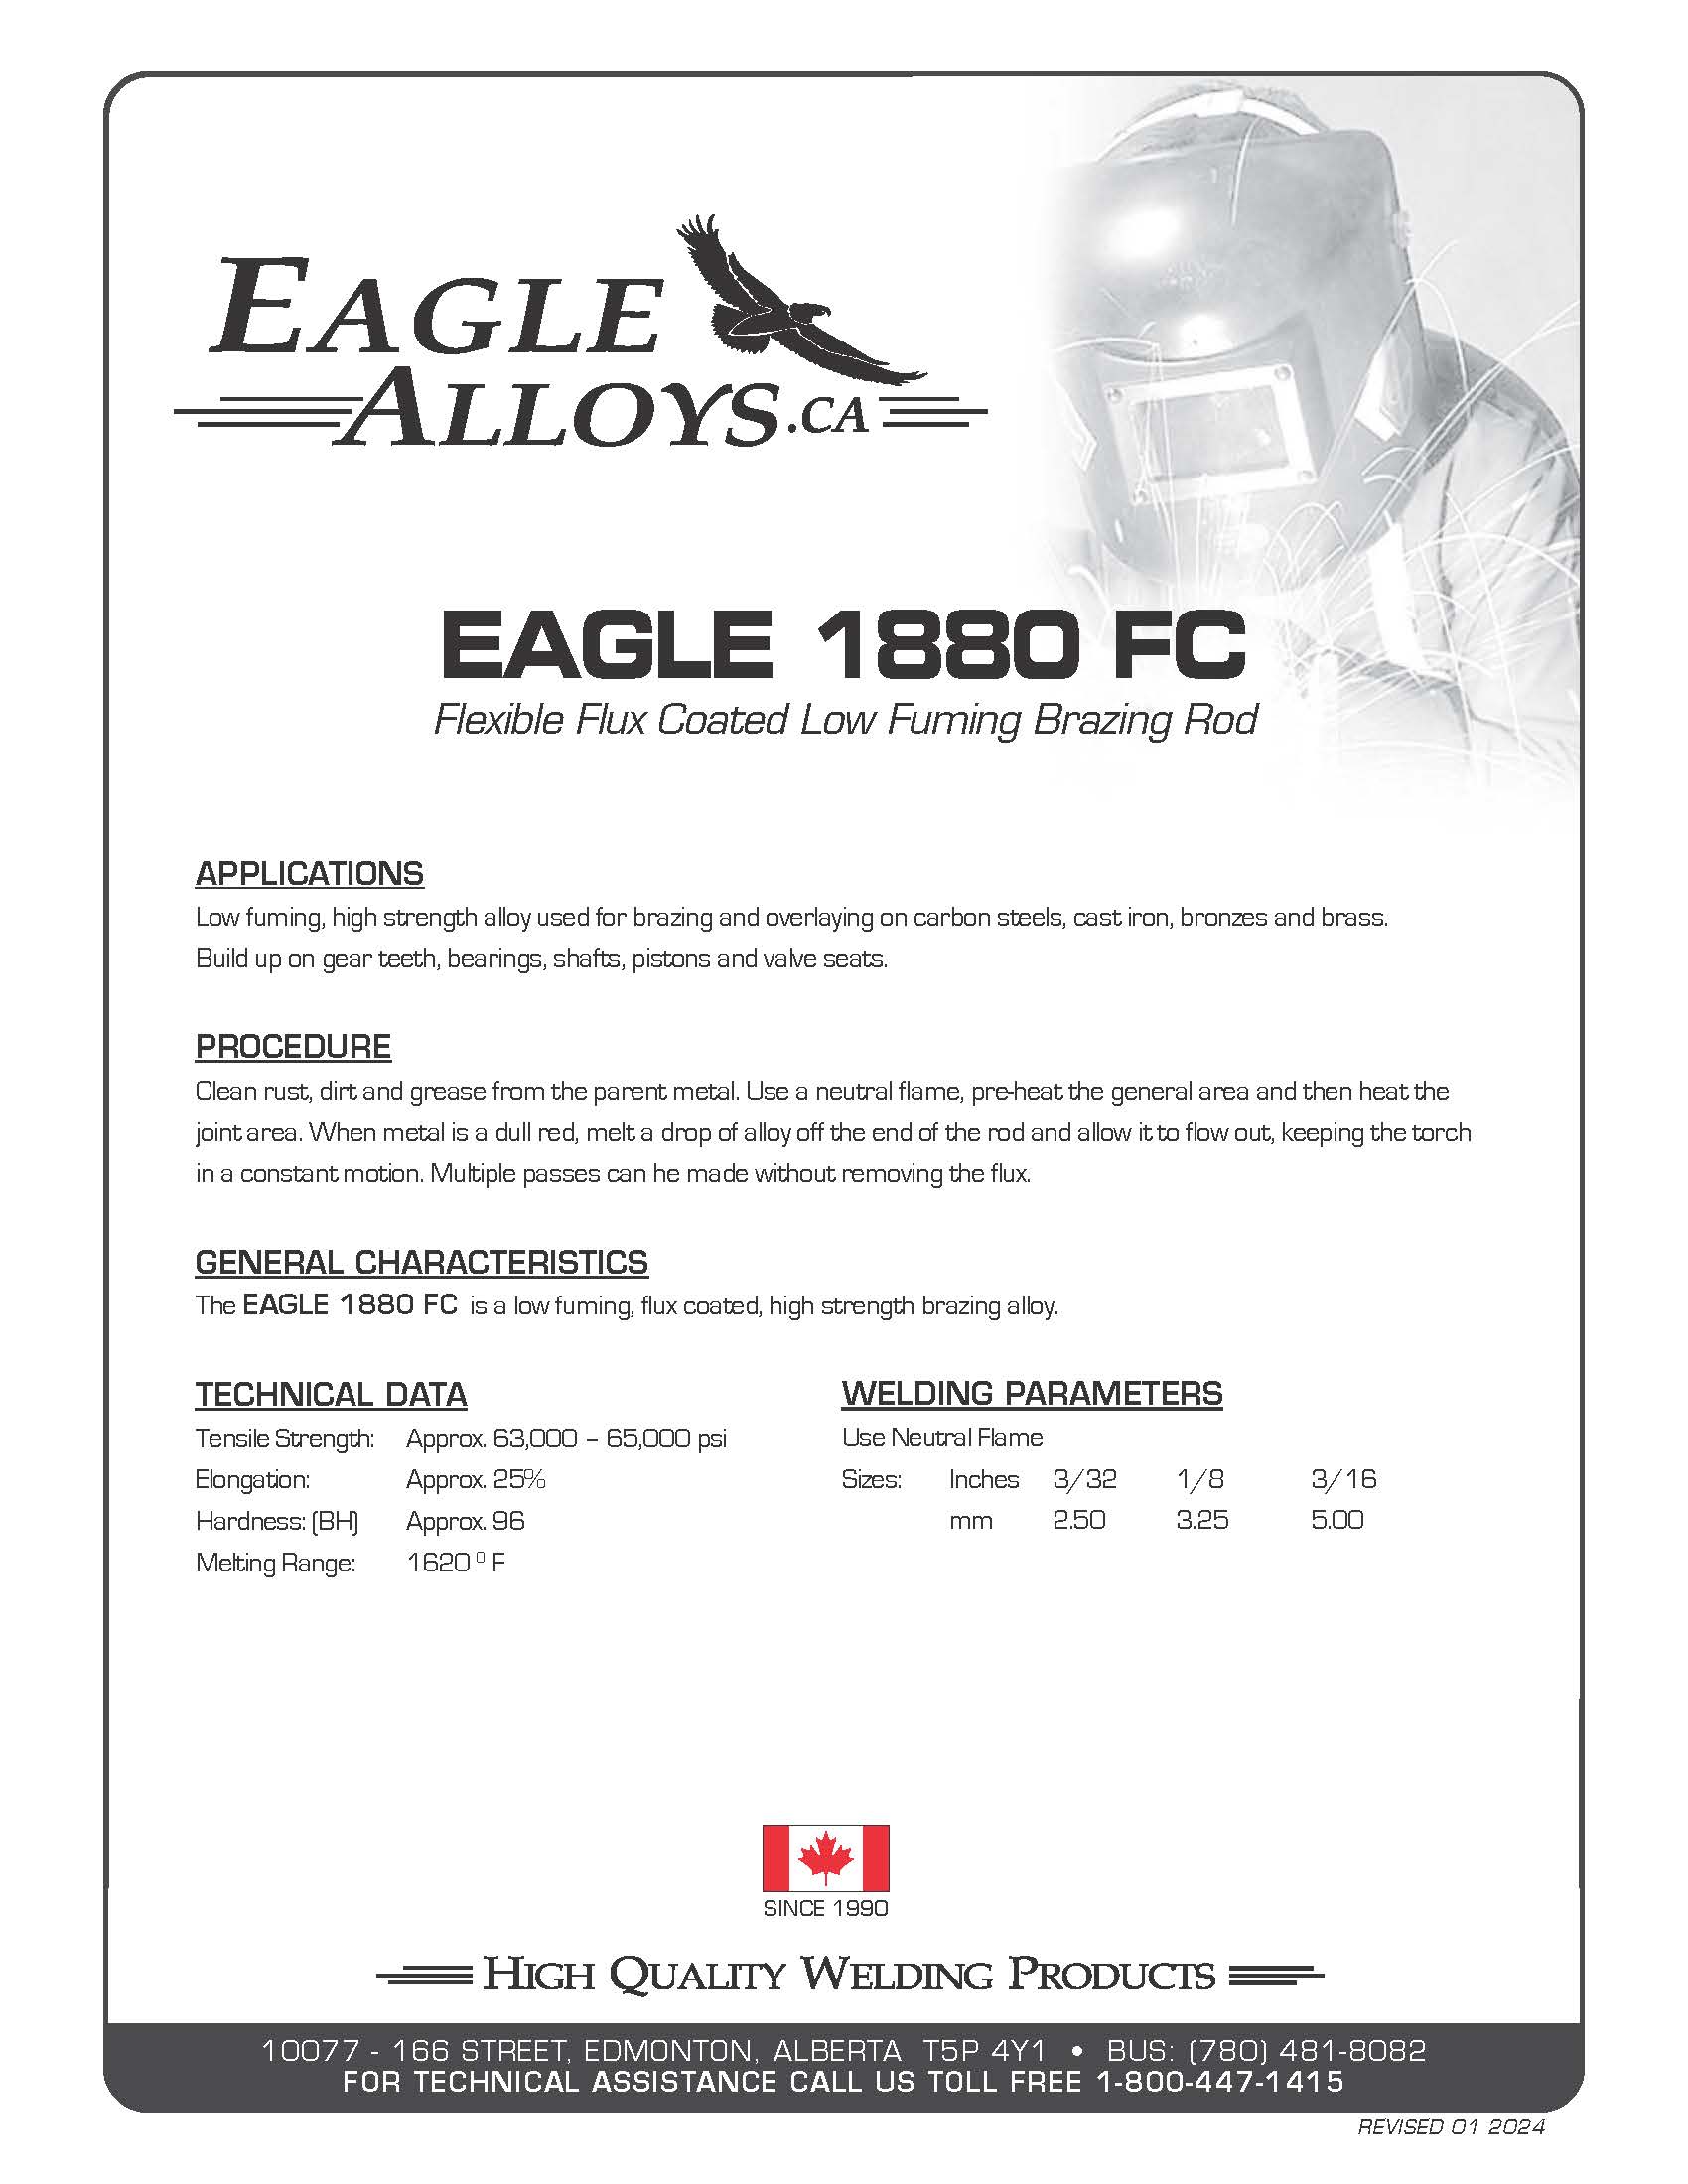 EAGLE 1880 FC PDF Applications, Procedure, General Characteristics, Technical Data, Welding Parameters